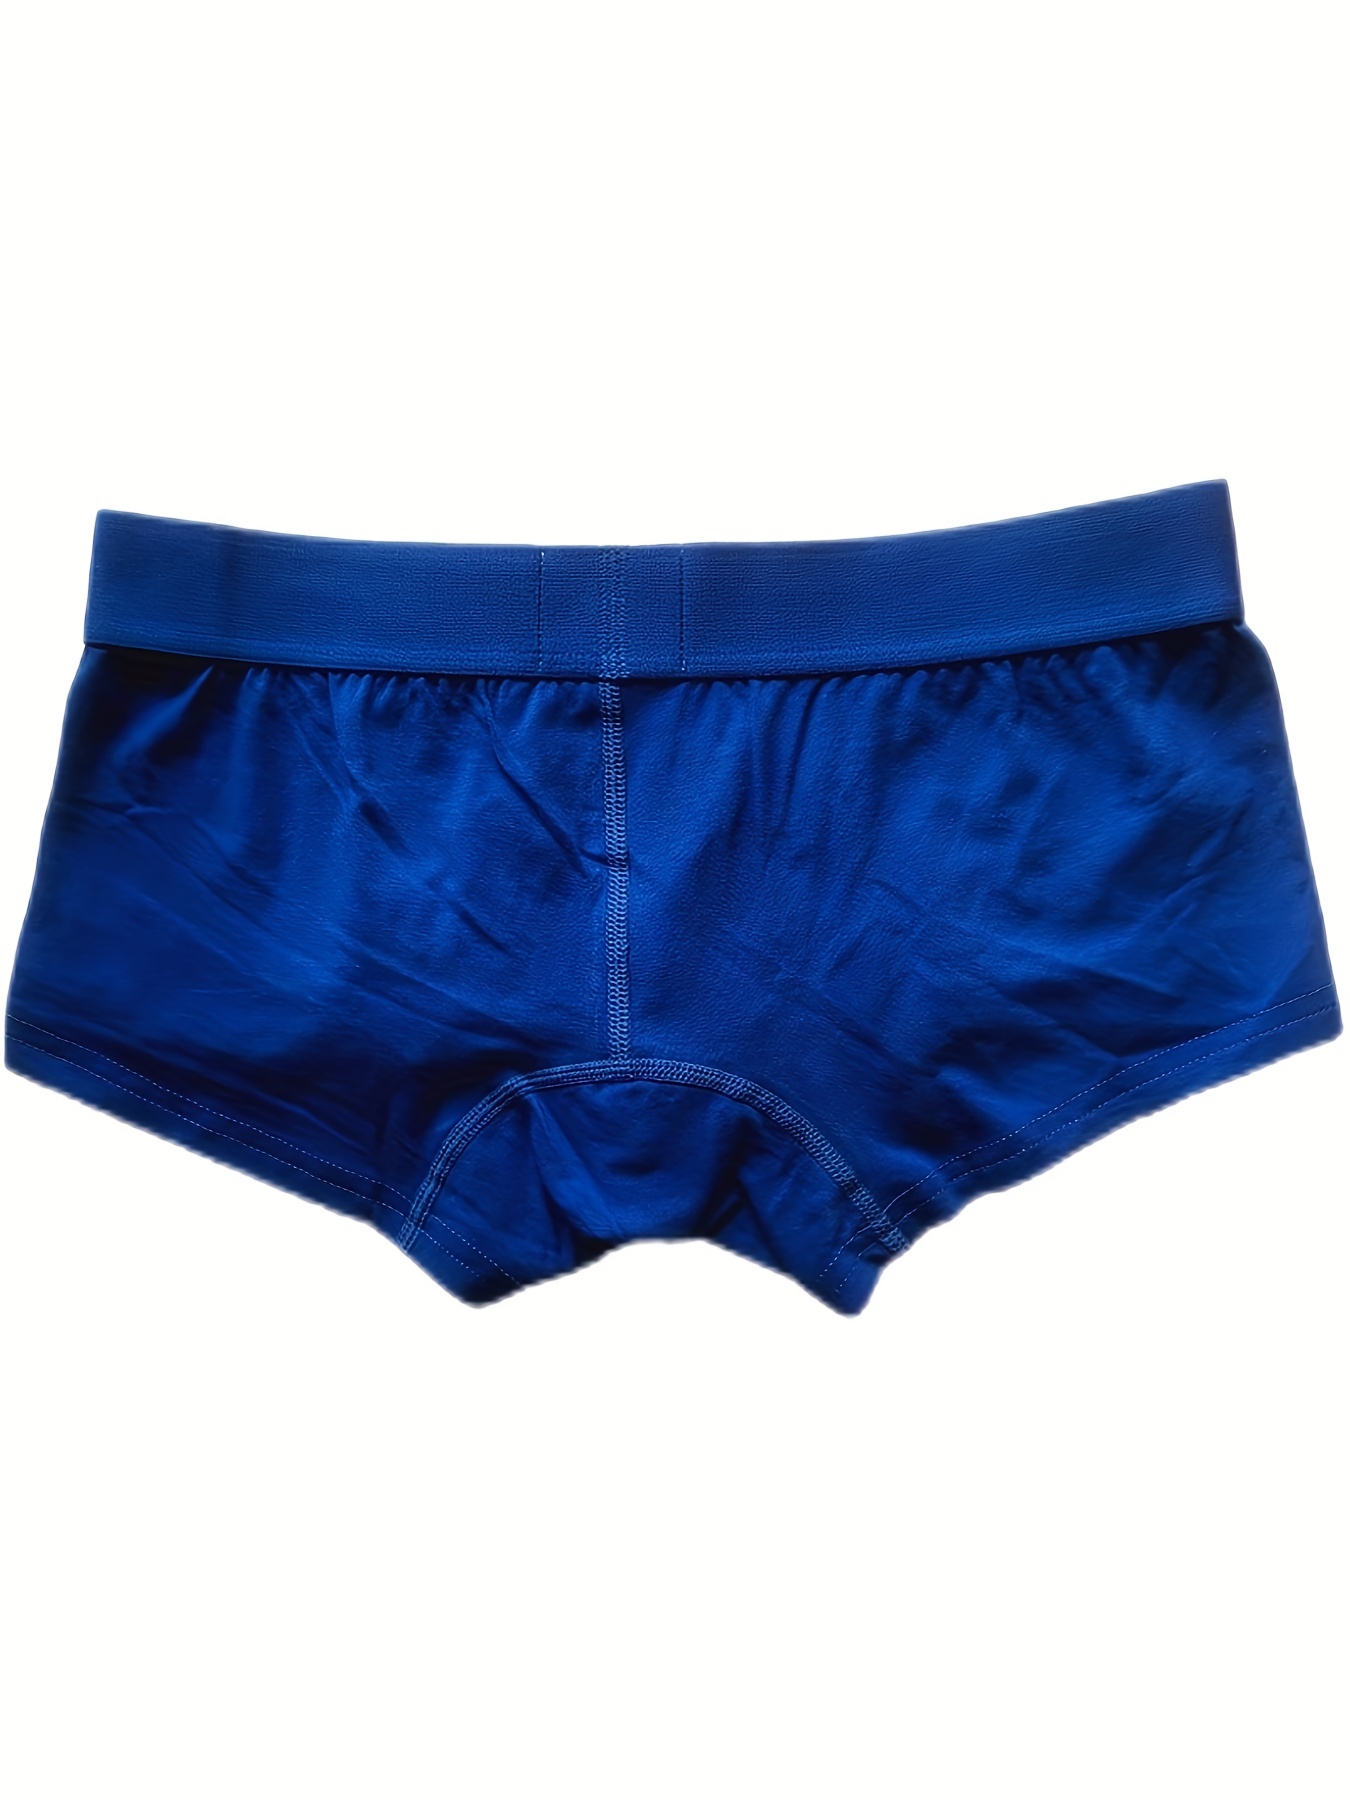 Men's blue briefs with ducks, low-waist underpants, tailored fit